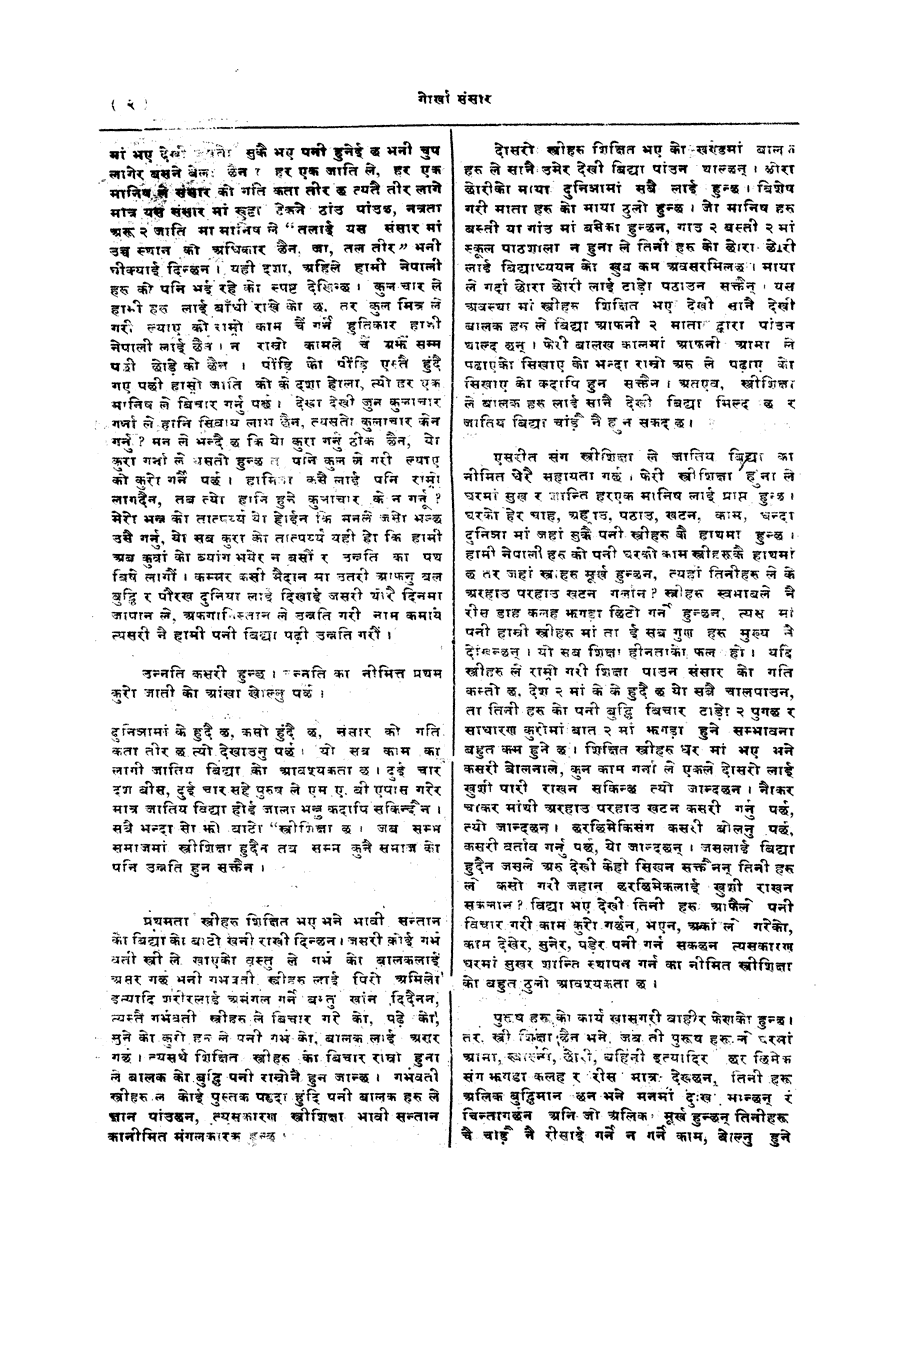 Gorkha Sansar, 1 June 1928, page 2